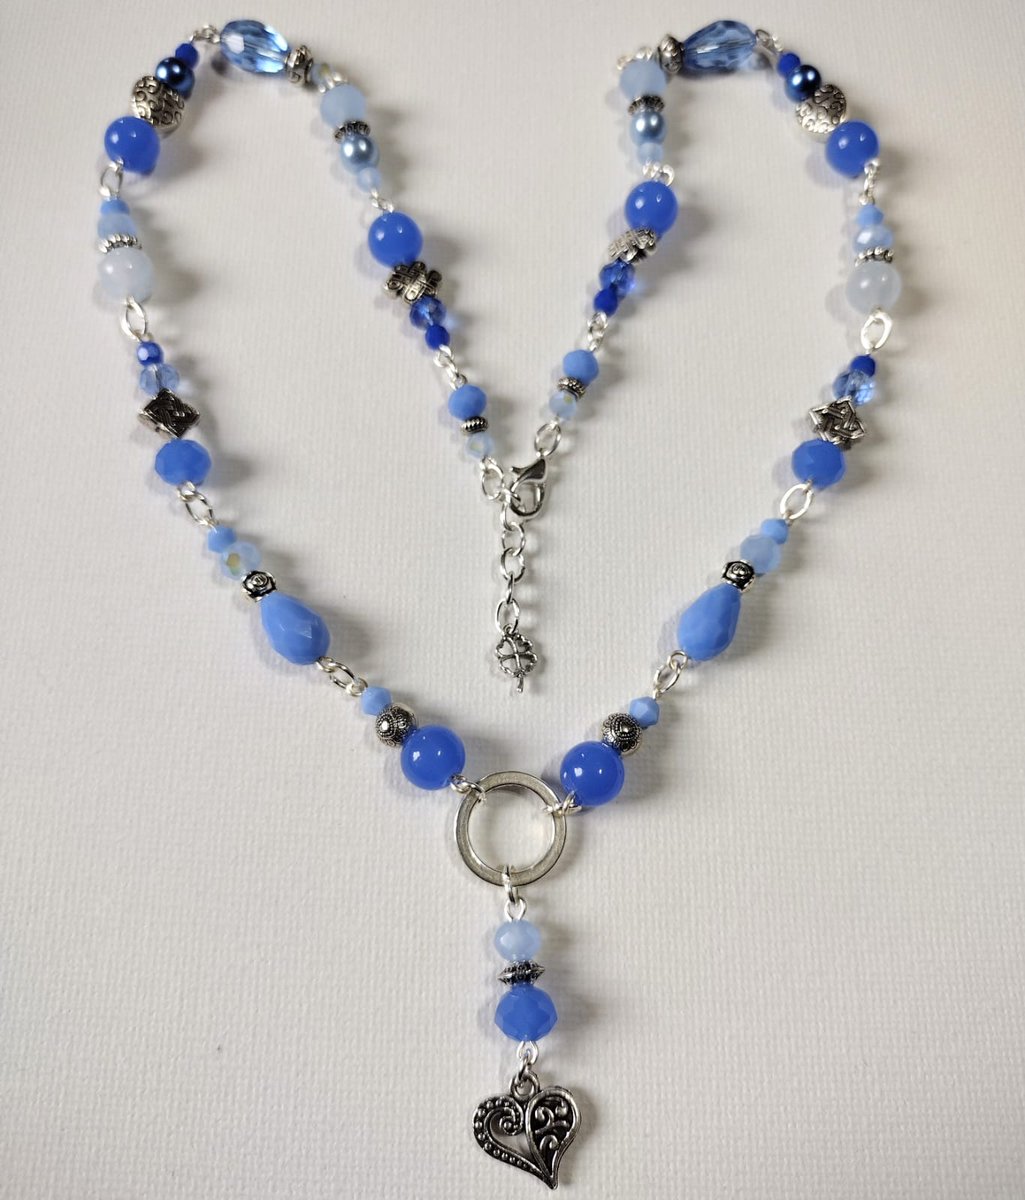 Summer blues handmade crystal, glass and gemstone statement necklace shorelinestudioni.etsy.com/listing/170225… #handmadenecklace #Mhhsbd #Fashion #TreatYourself #handmadejewelry #handmade #necklace #Shopsmall #Giftidea